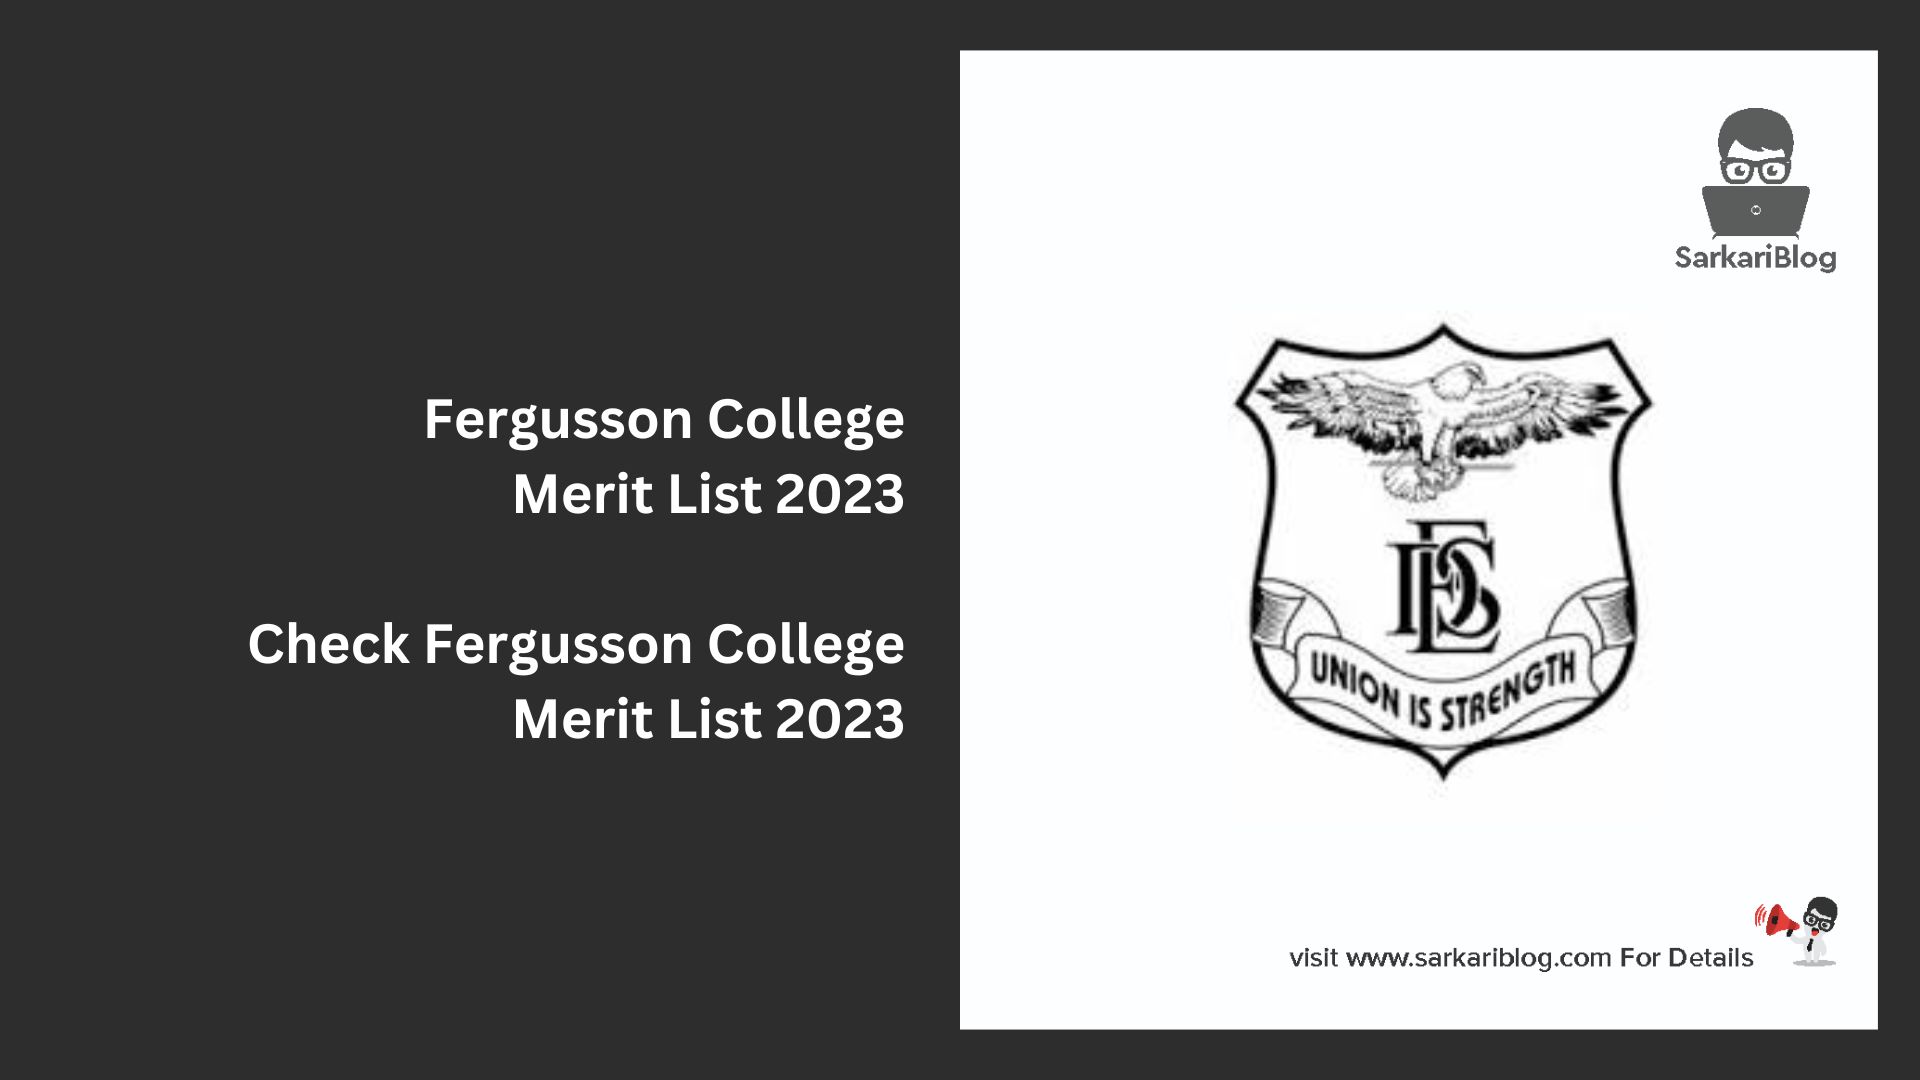 Fergusson College Merit List 2023